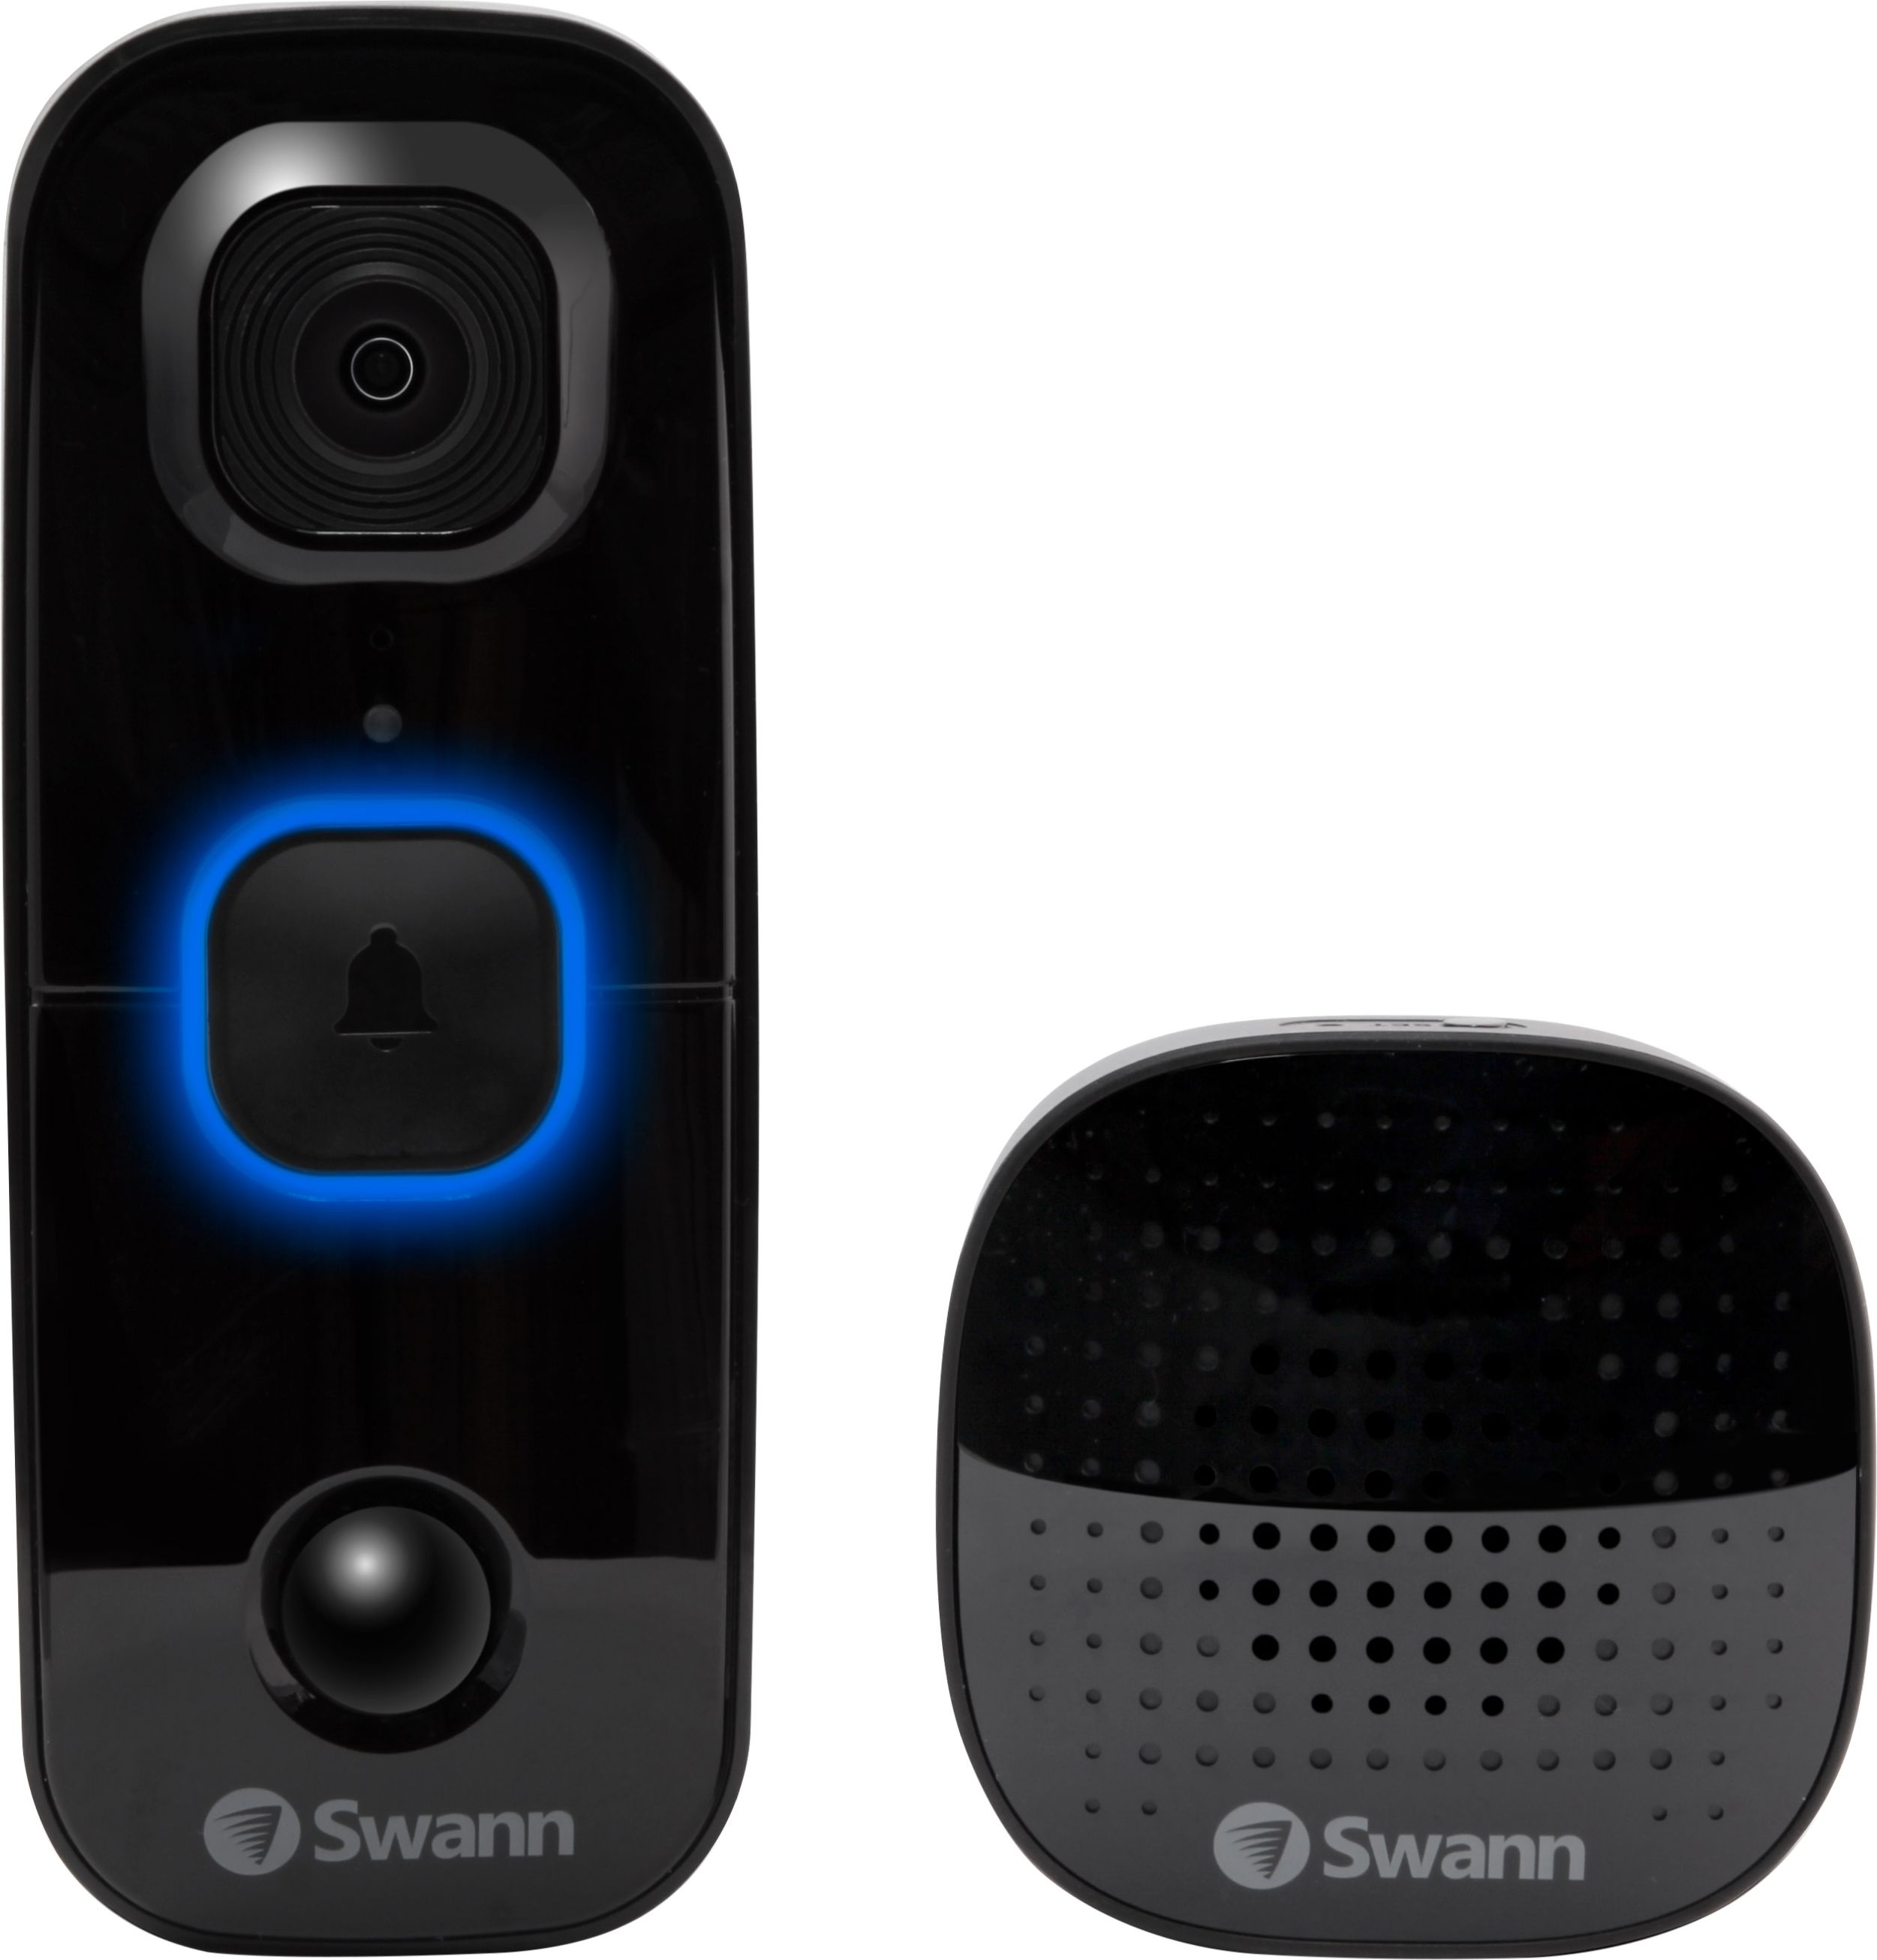 Swann Buddy Smart Doorbell Full HD 1080p - Black, Black